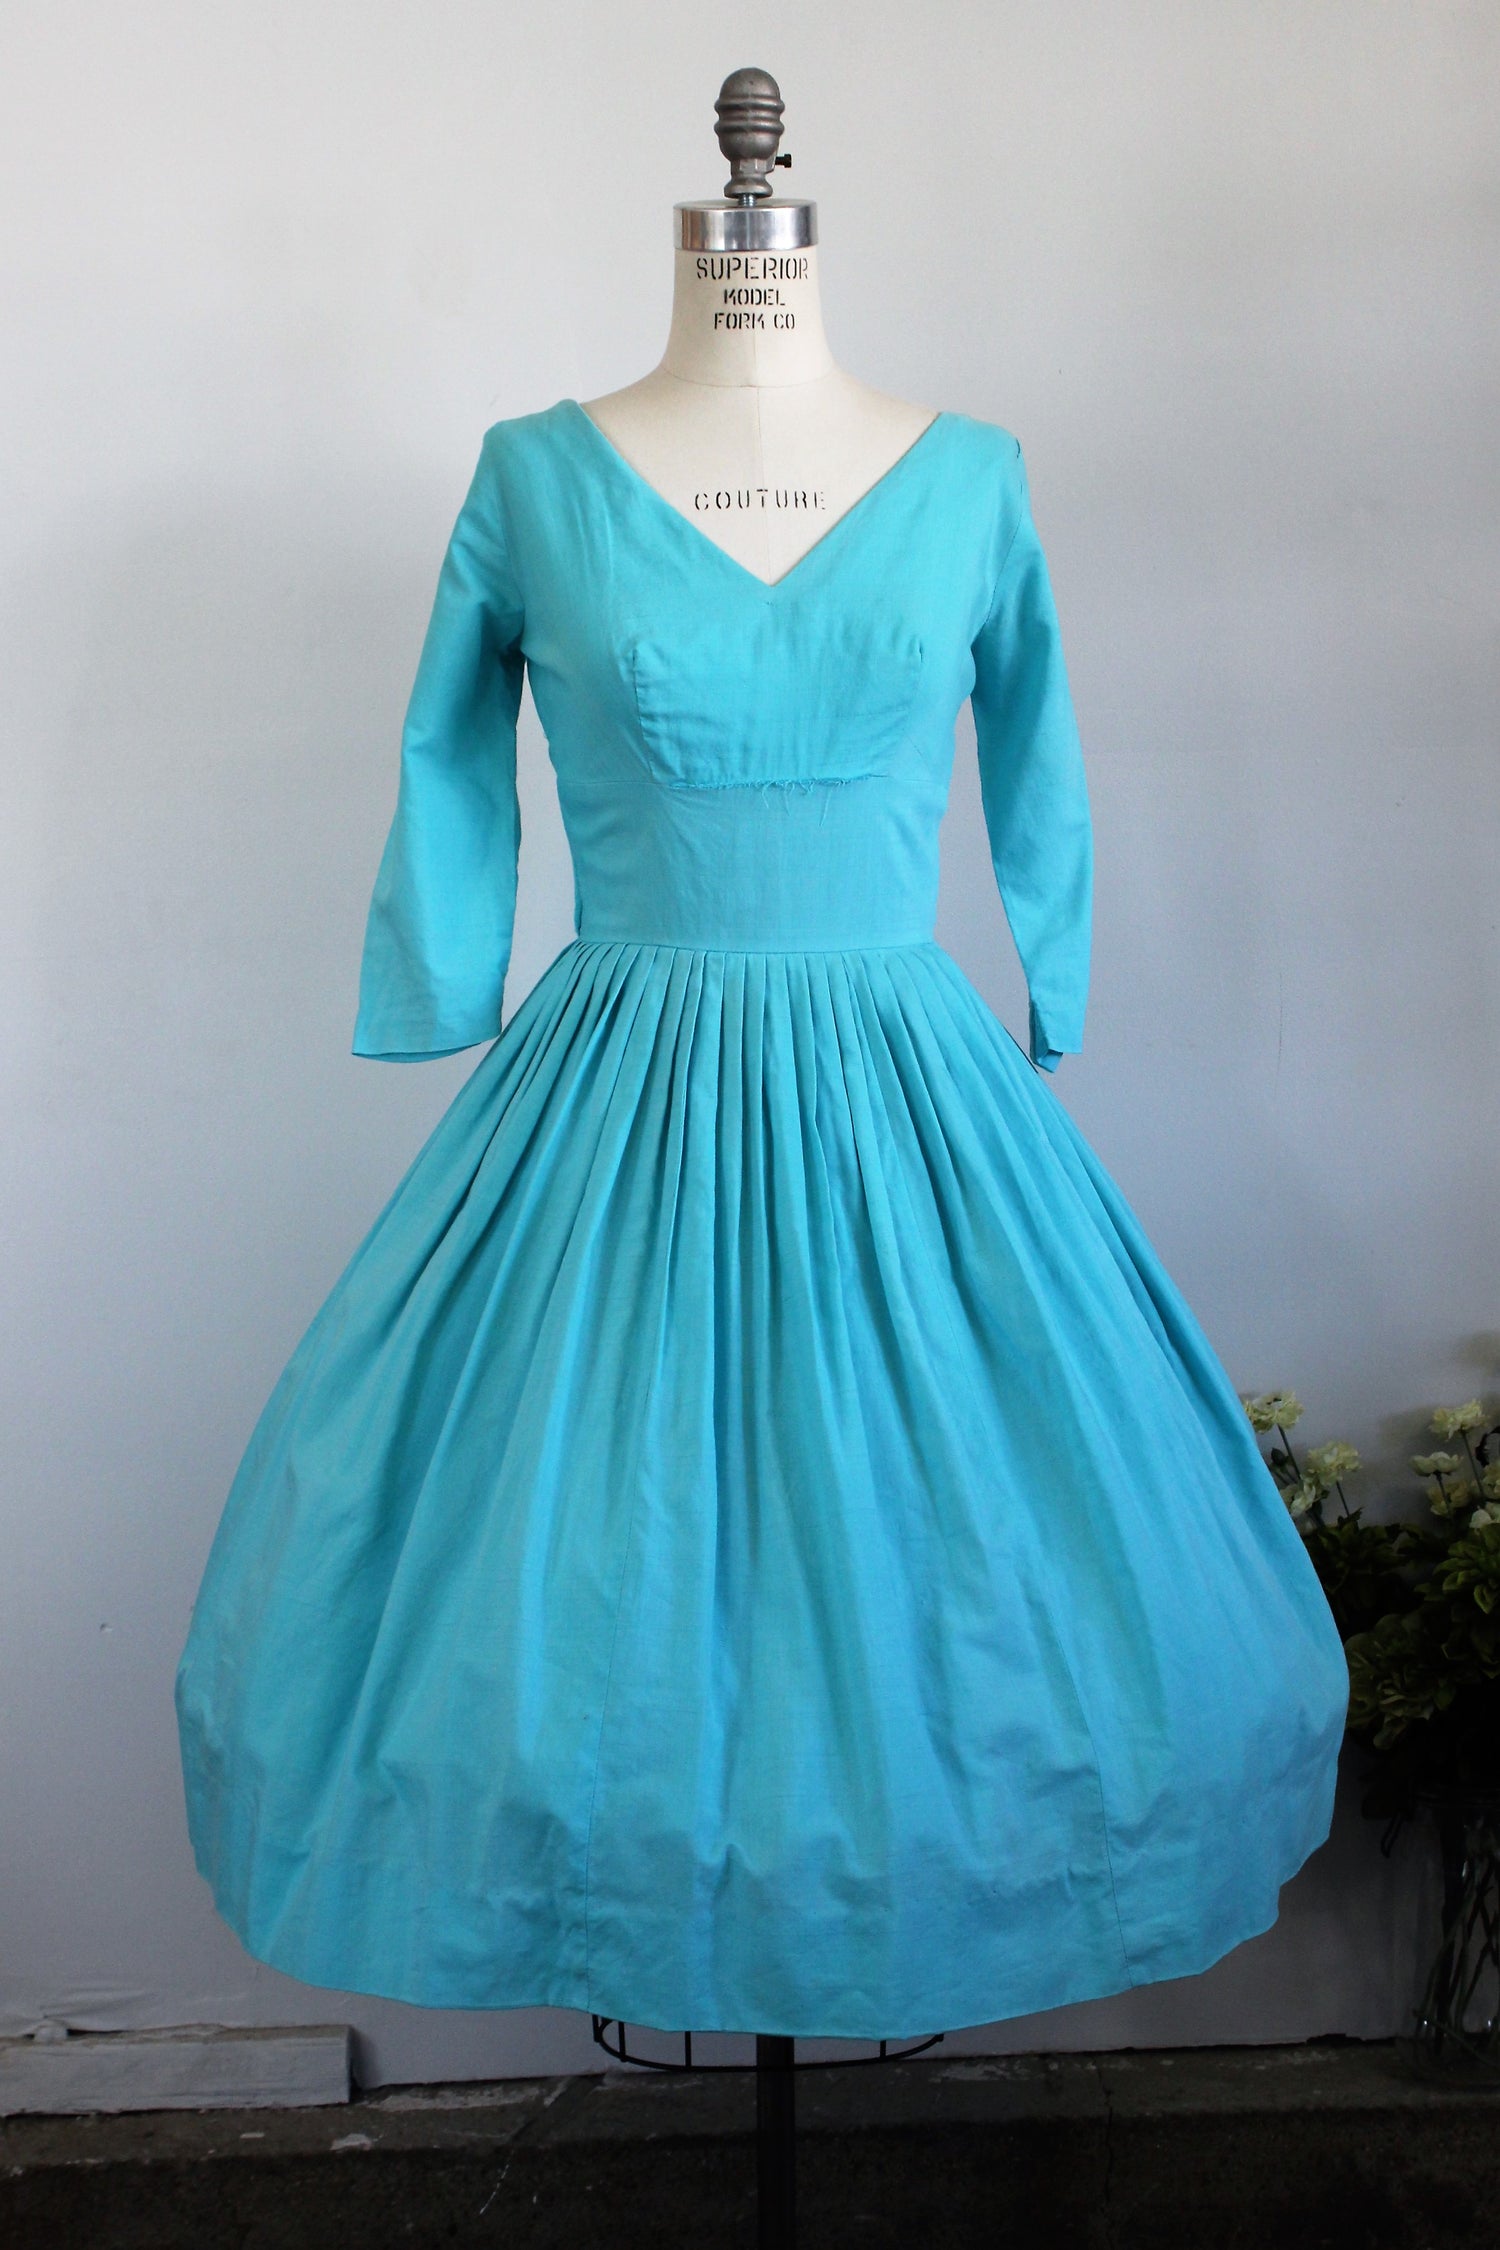 Vintage 1950s New Look Dress in Teal Blue